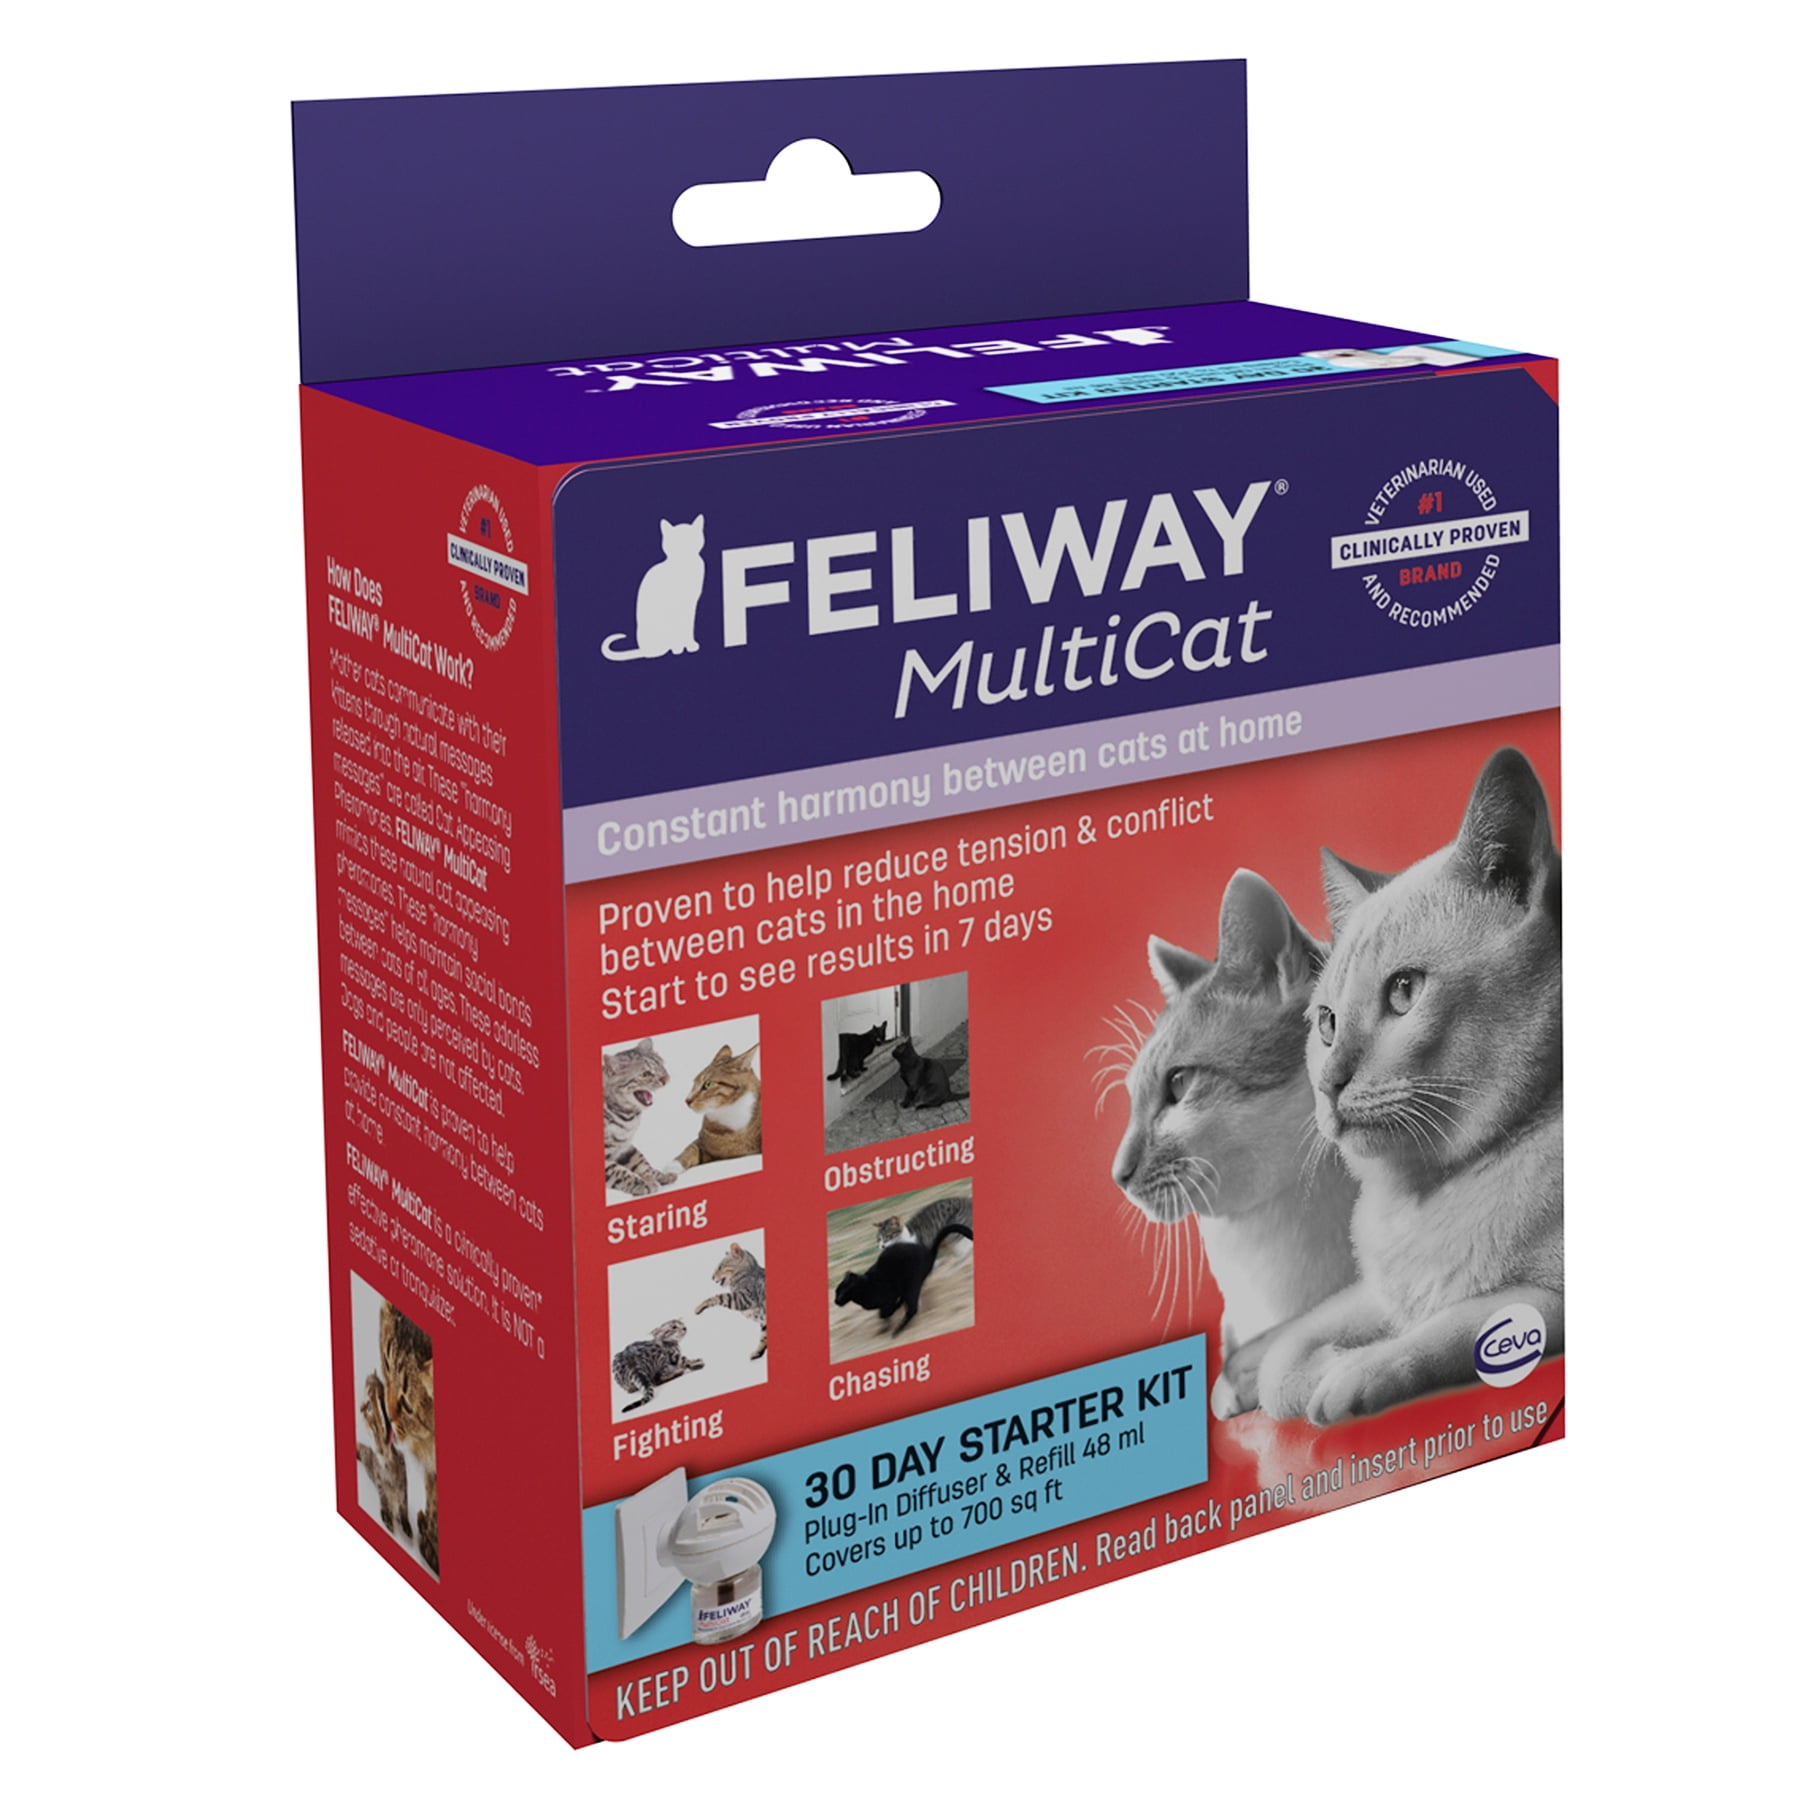 Feliway Optimum 30 Day Starter for Cats Plug In Diffuser & Refill 48ml 3105  MPN #D89410B 